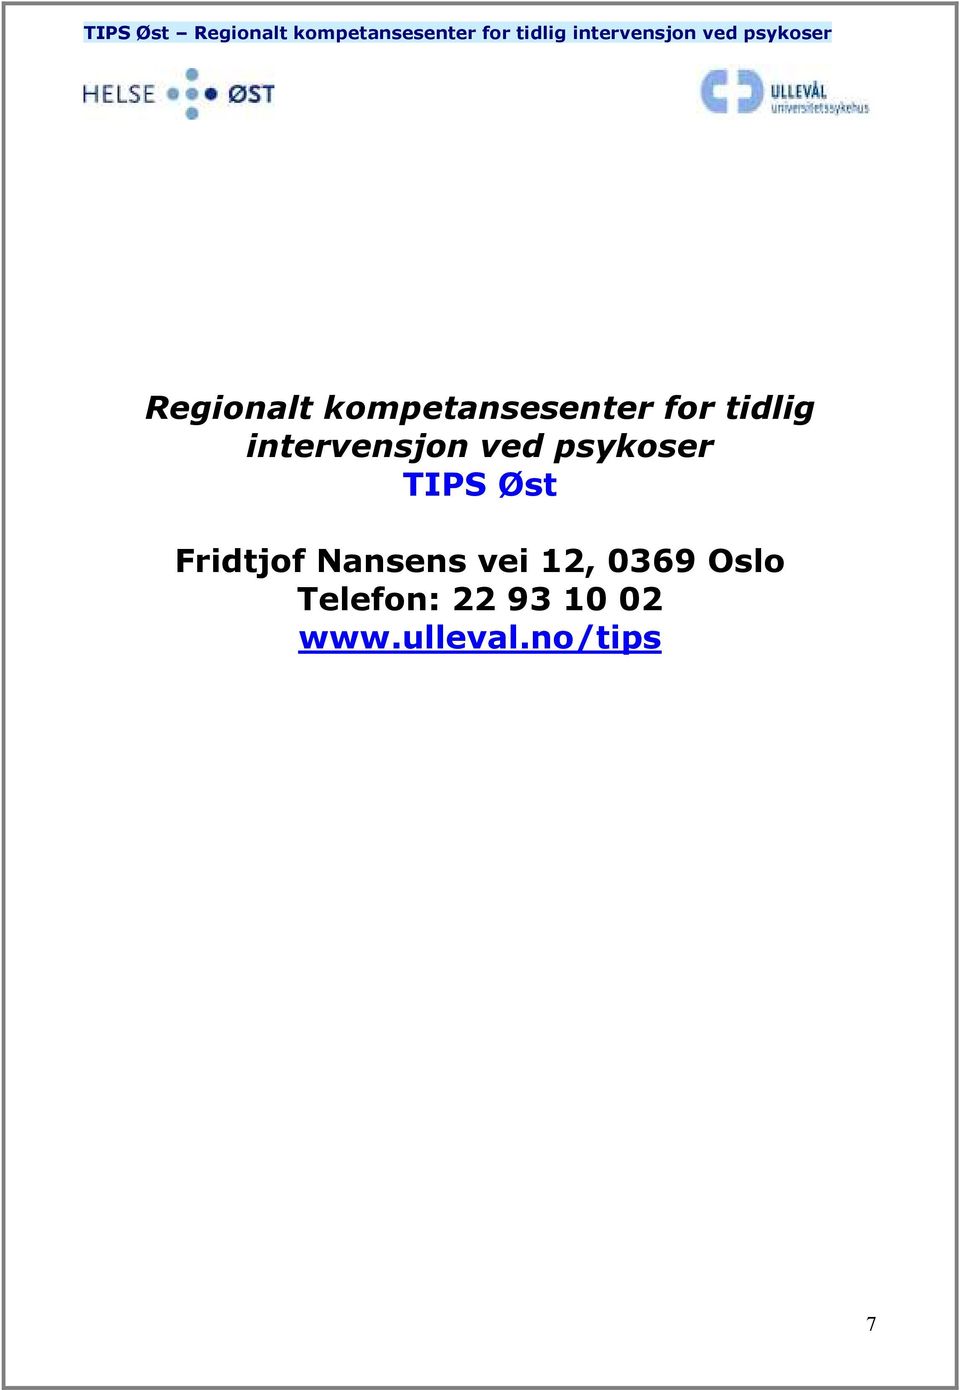 Fridtjof Nansens vei 12, 0369 Oslo